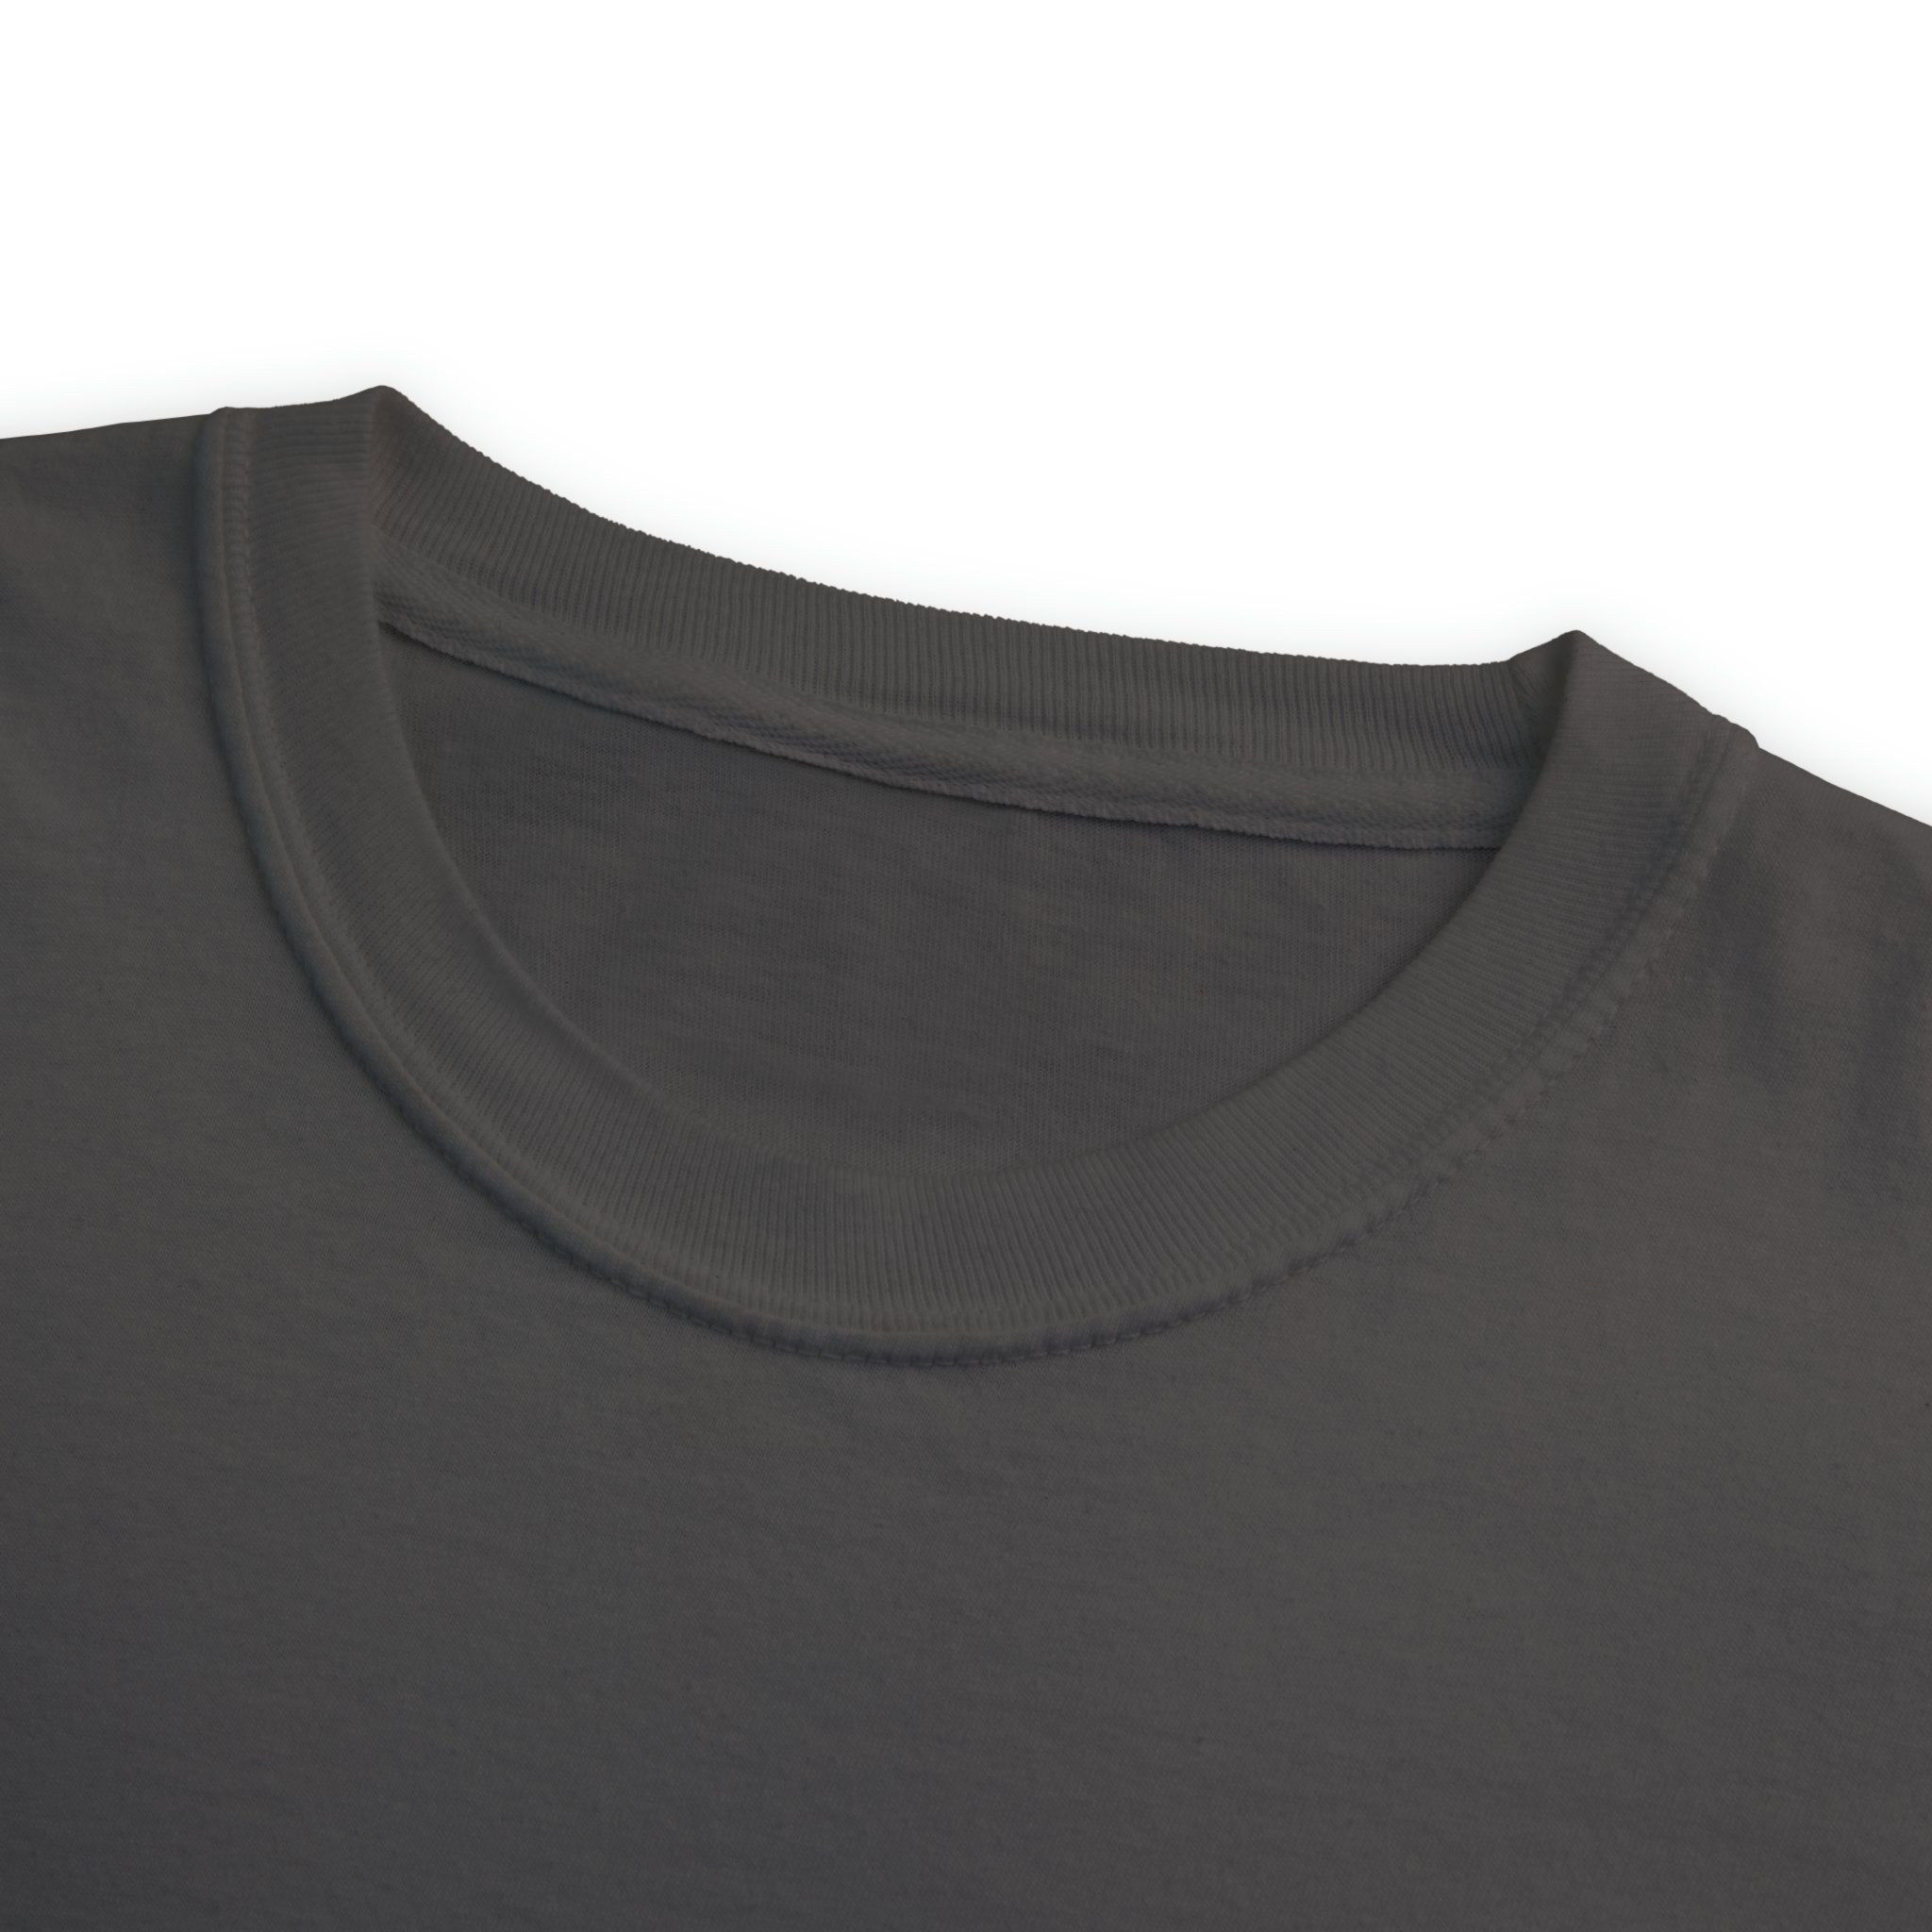 Unisex Pocket T-Shirt #8 Front Collar Closeup (4)